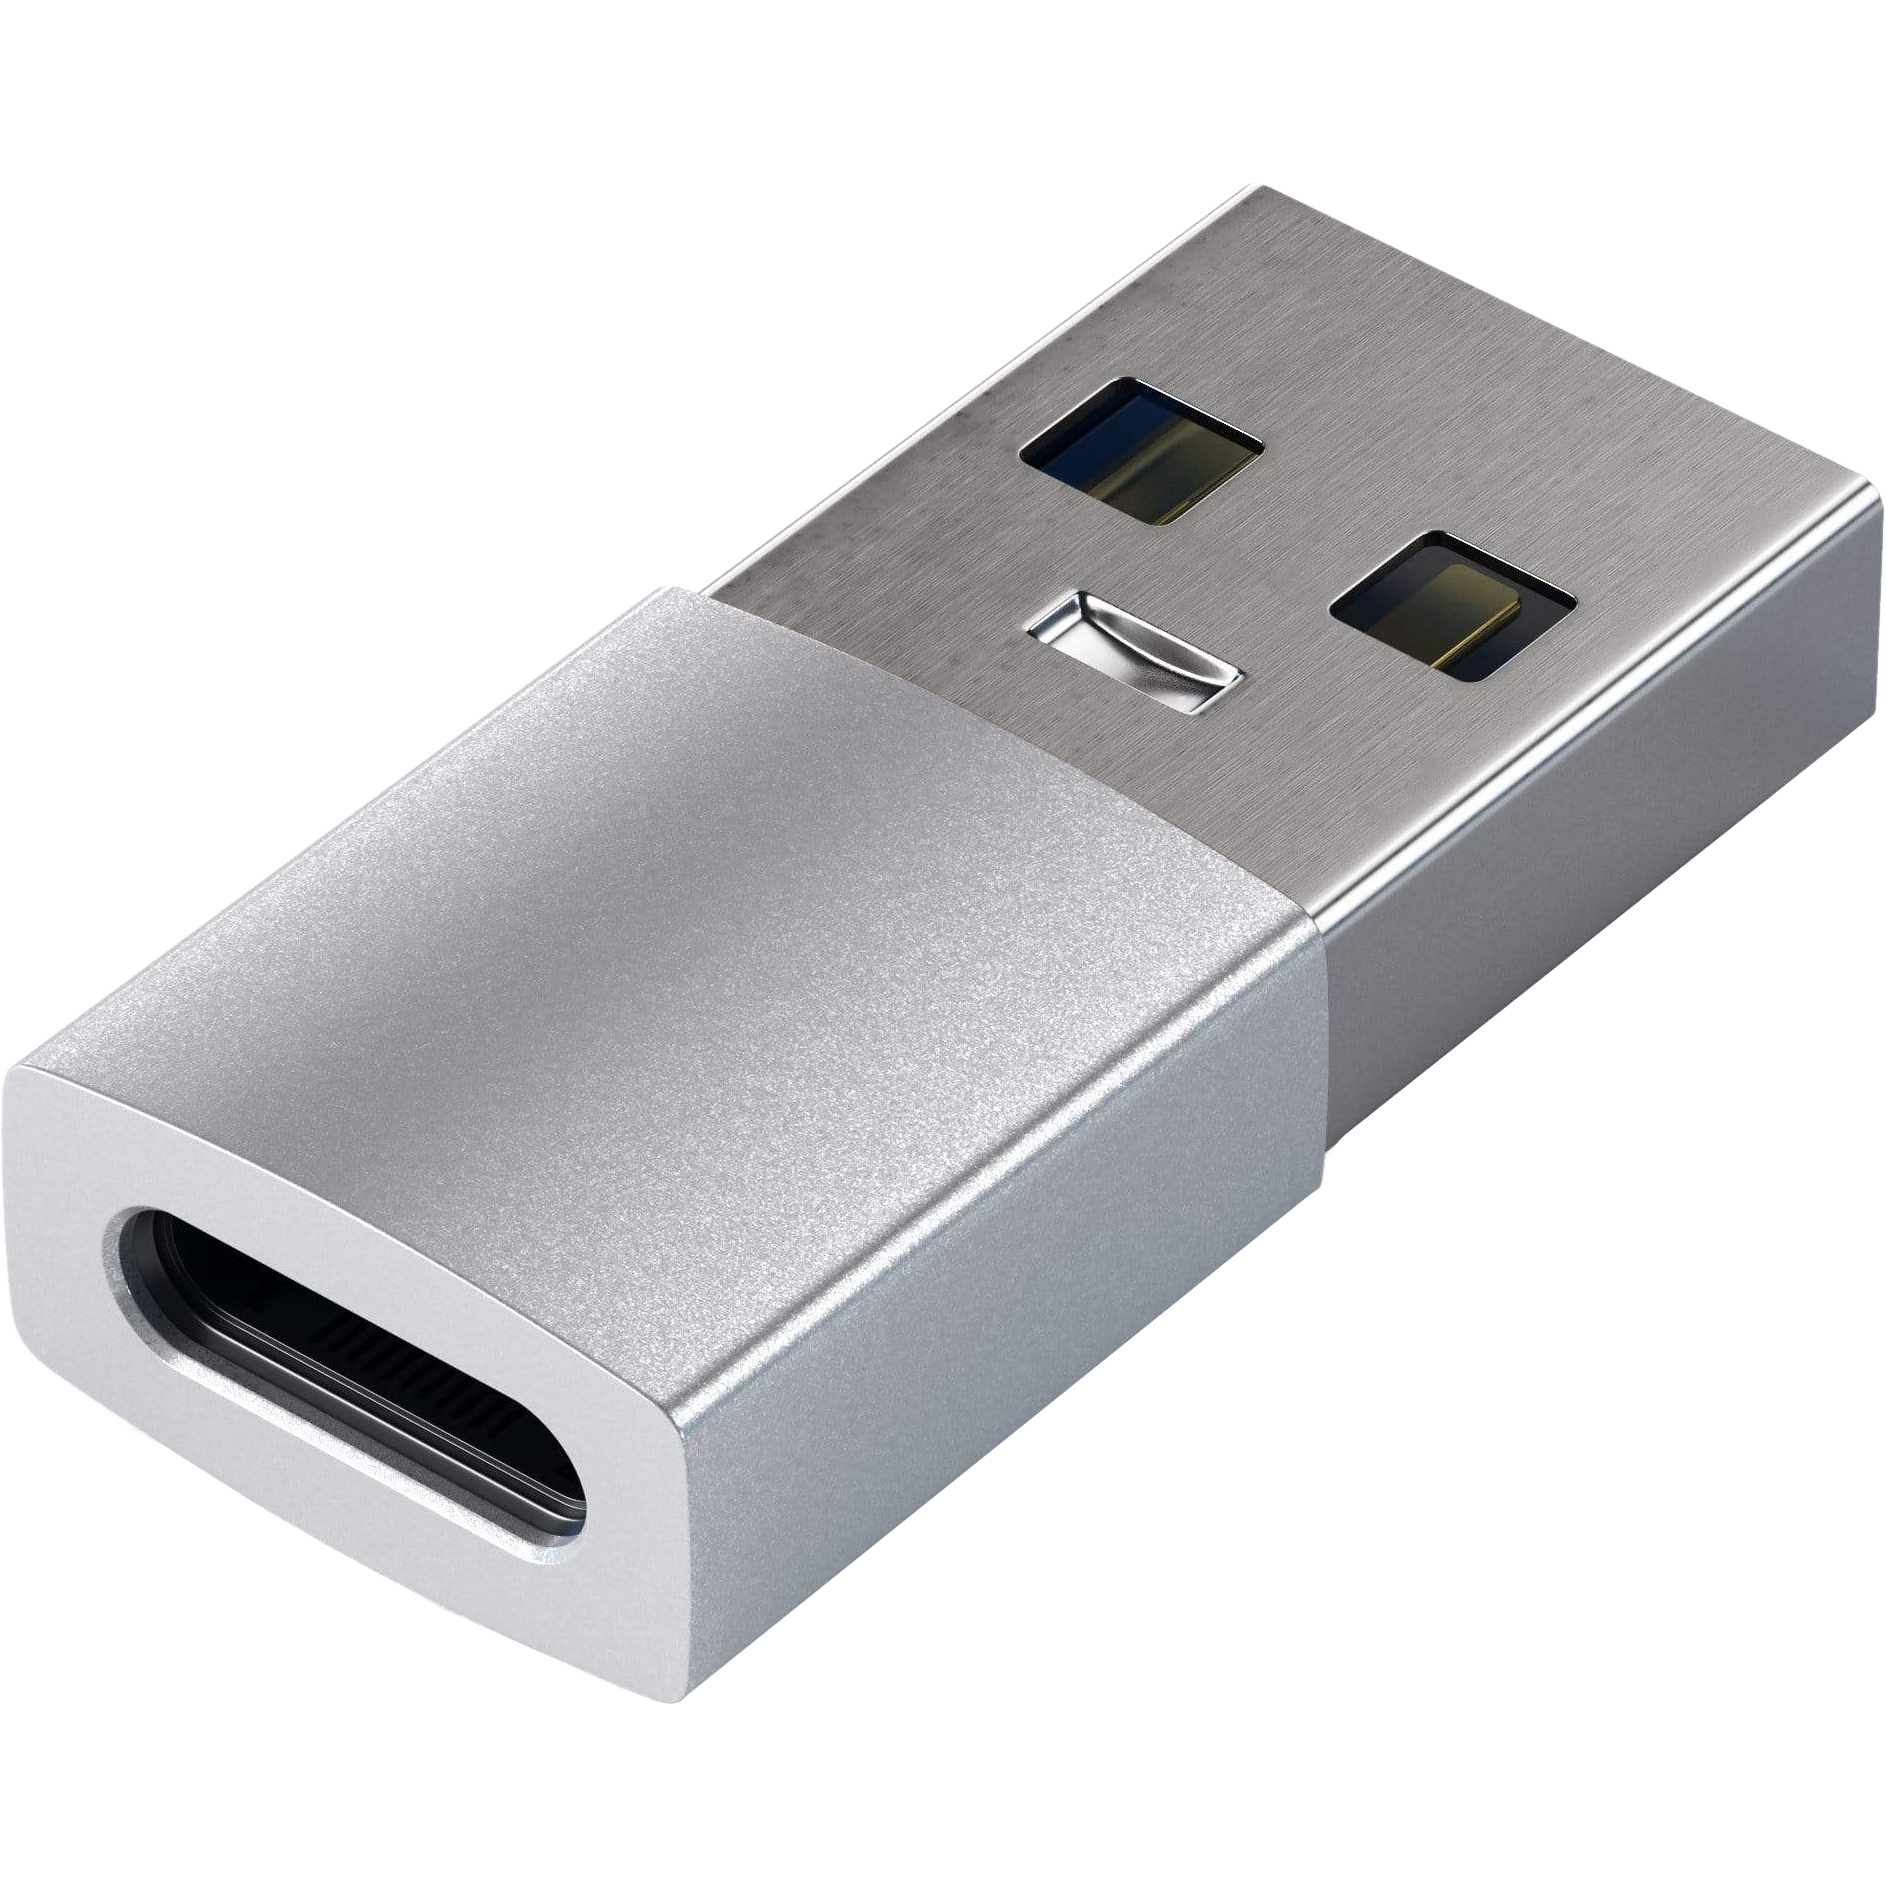 Переходник Satechi USB Type-A to Type-C серебристый переходник j5create usb type a 3 0 на 4k hdmi